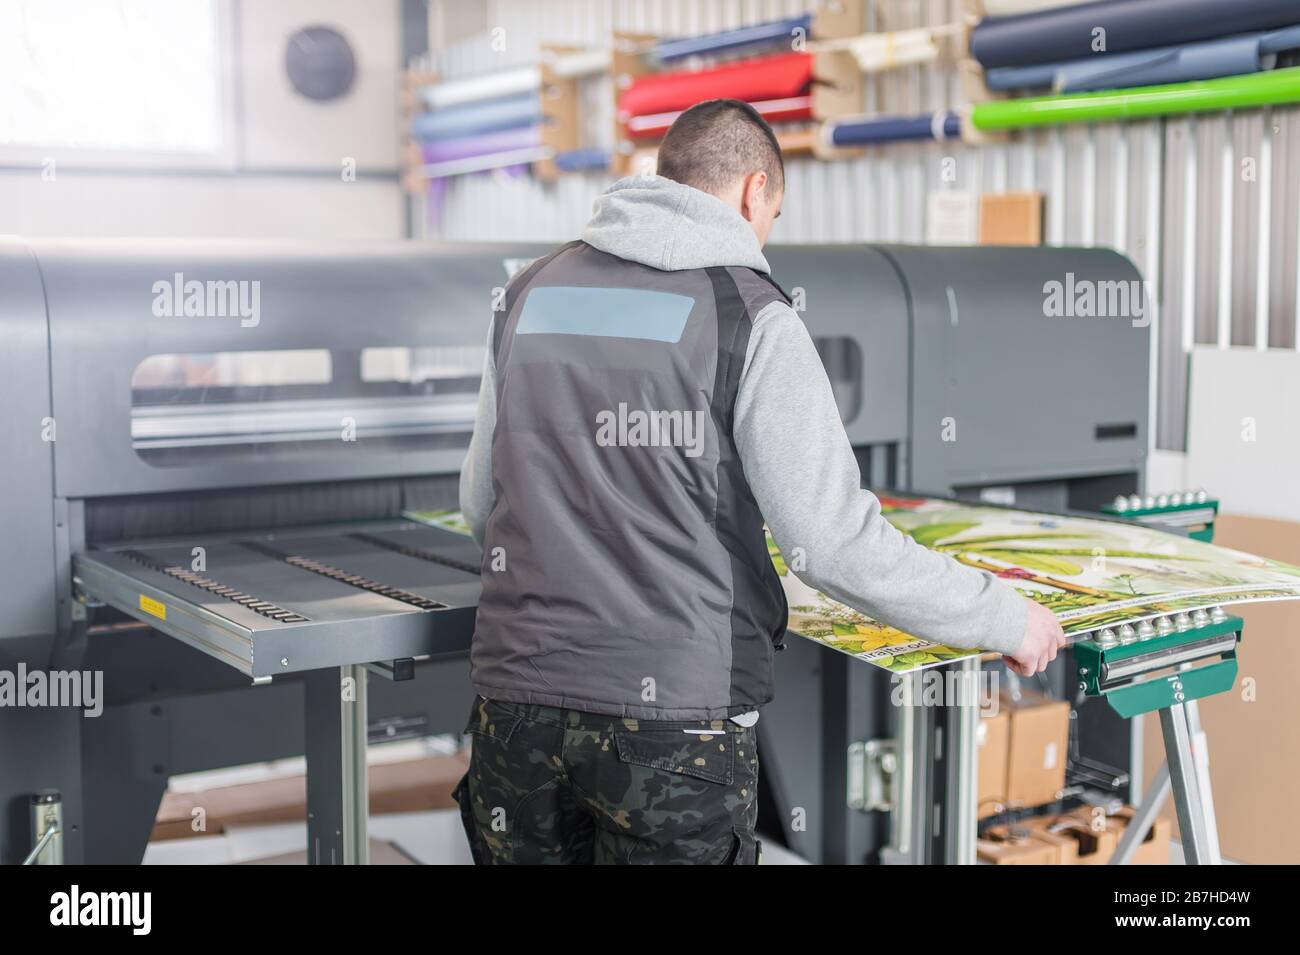 Technician worker operator works on large premium industrial printer ...